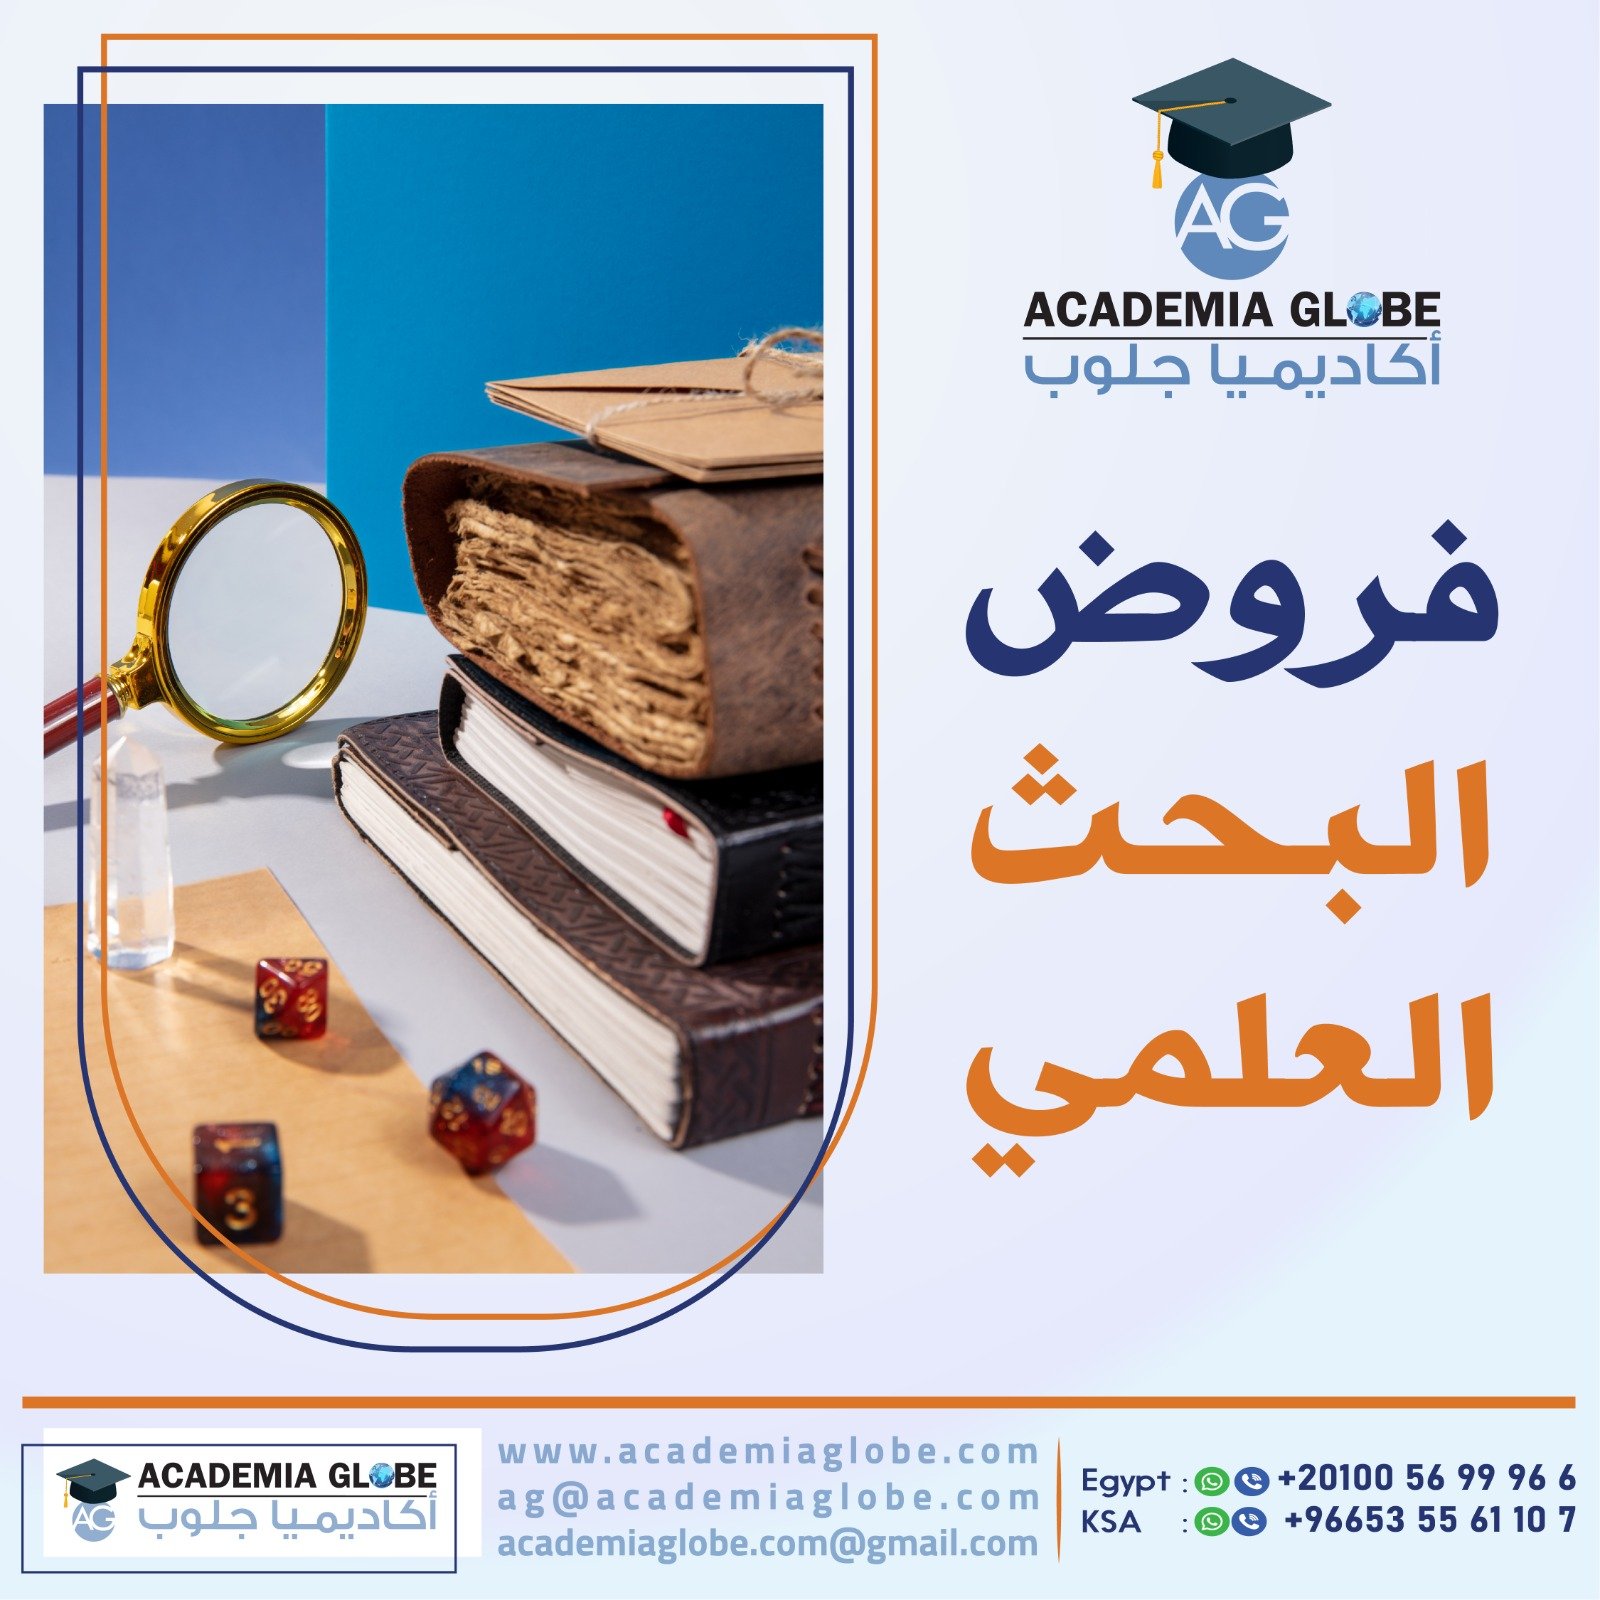 Academia_Globe